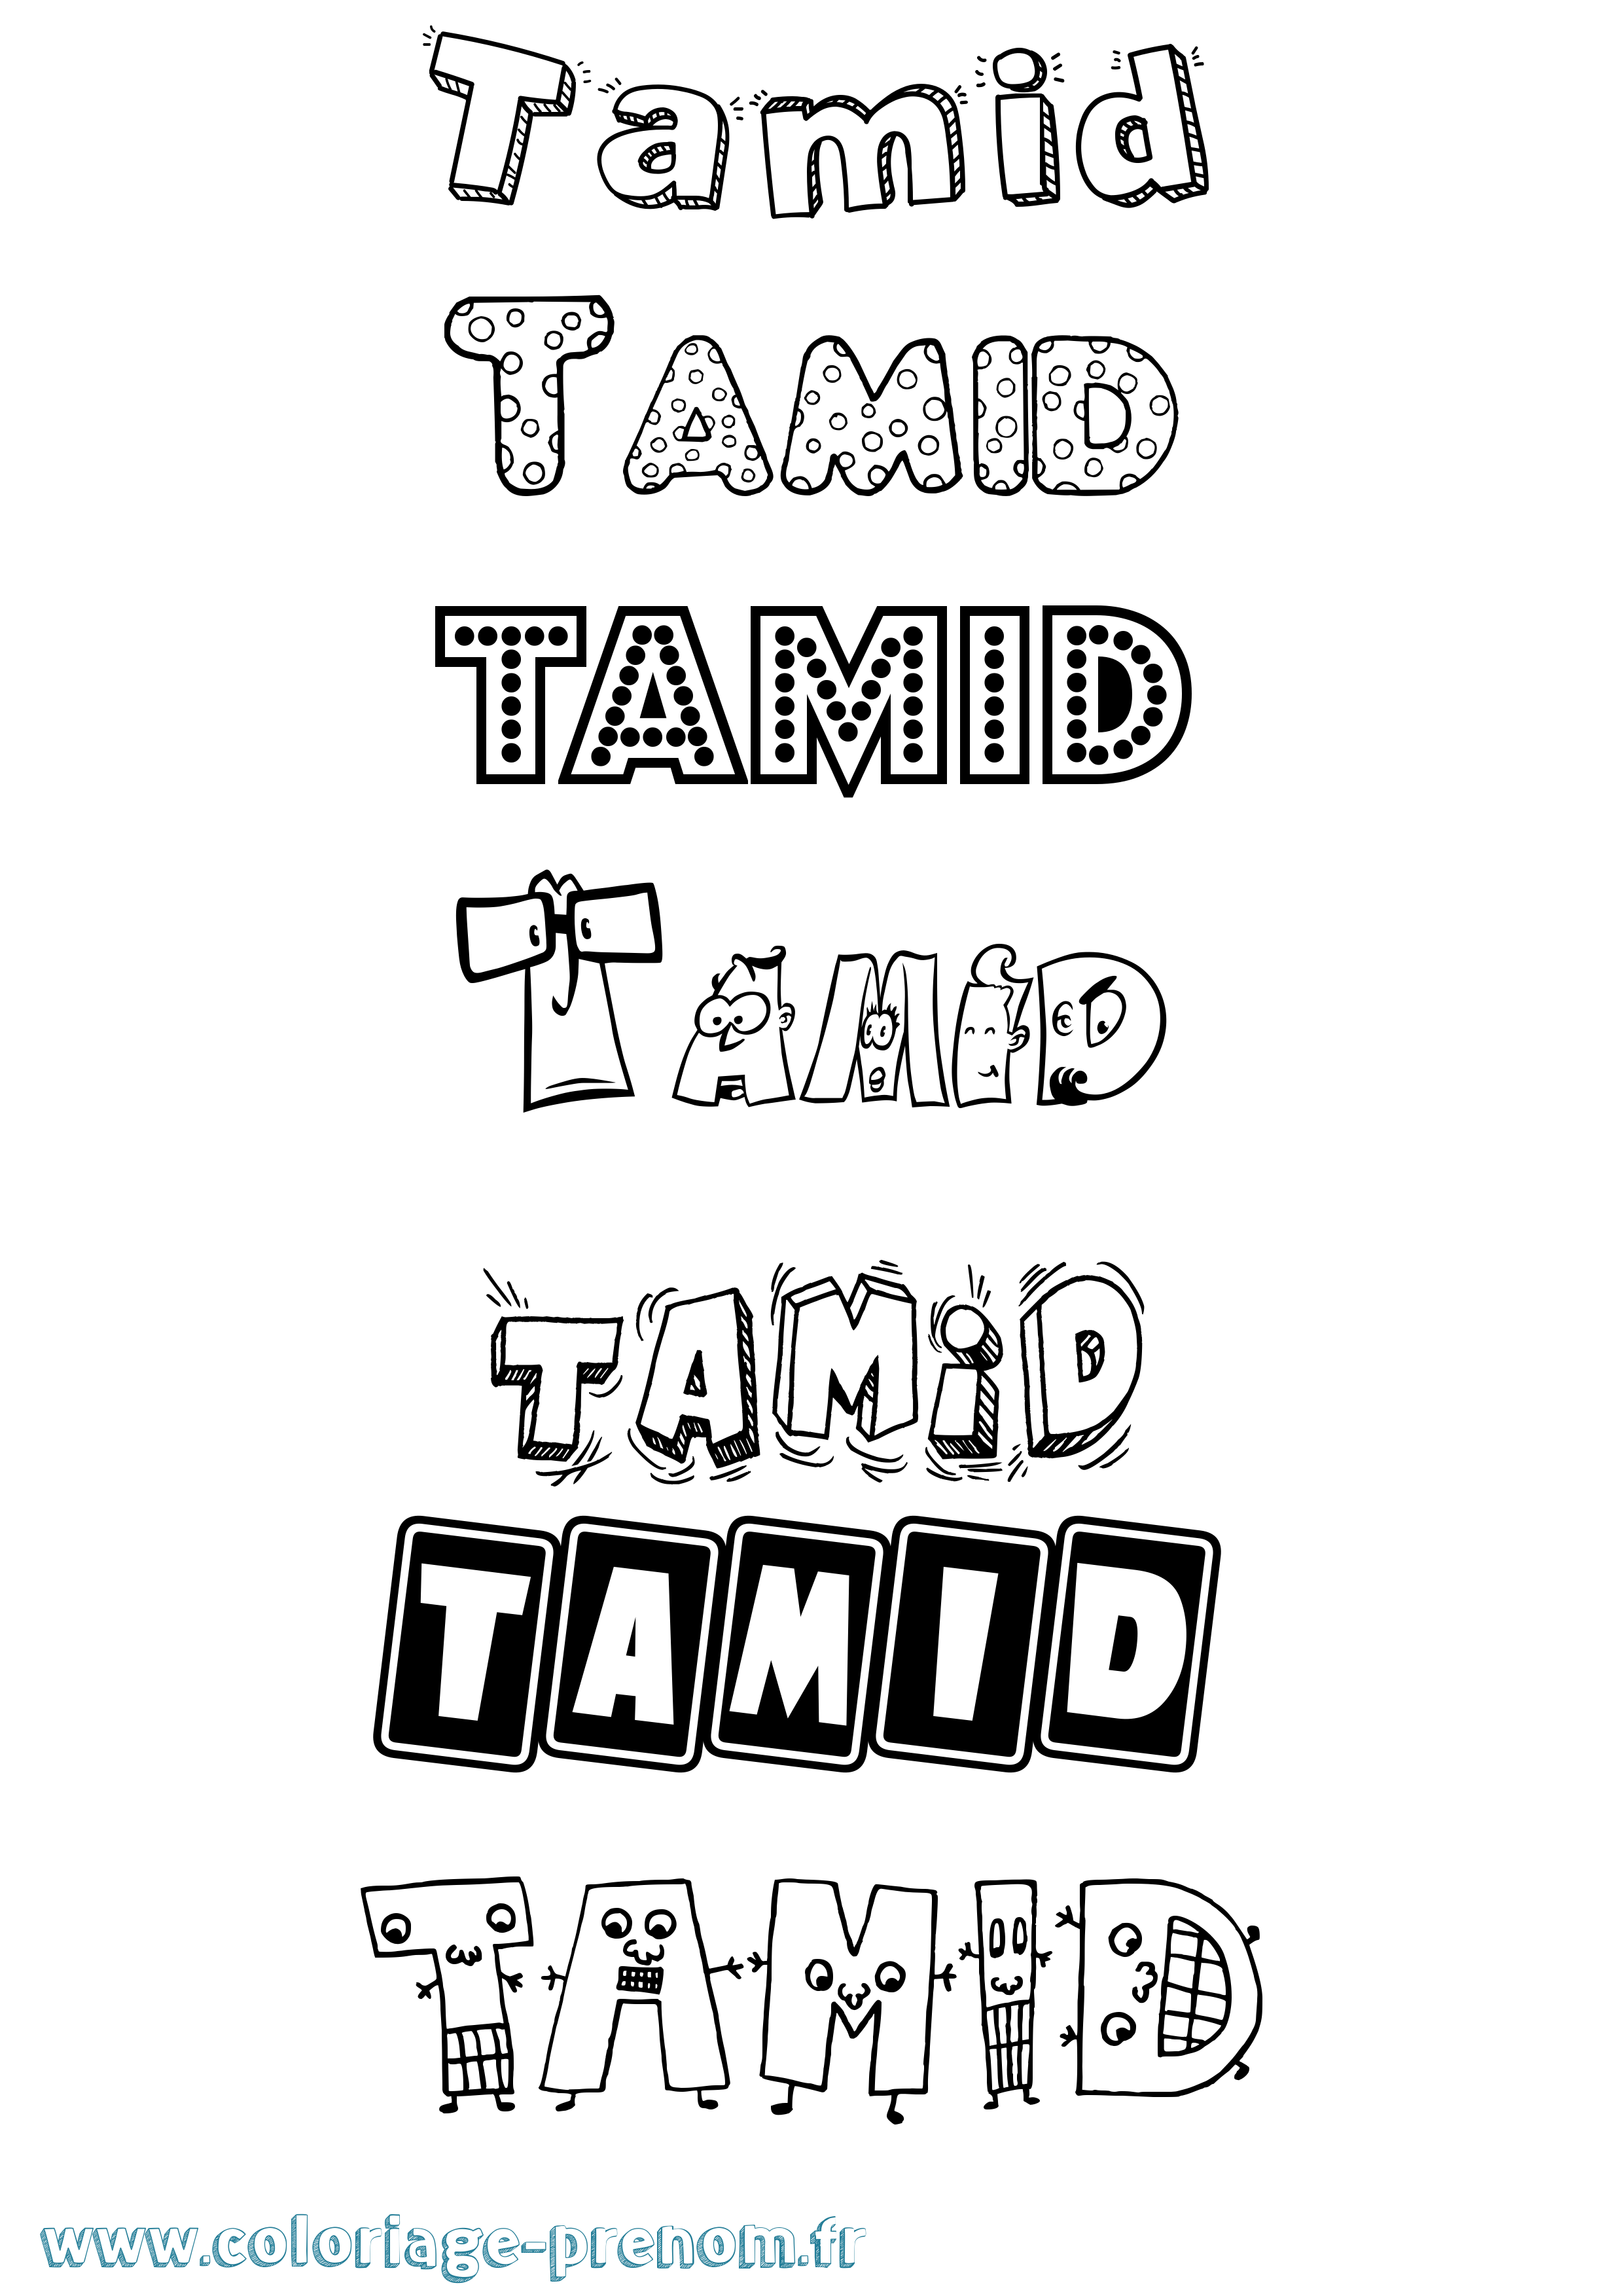 Coloriage prénom Tamid Fun